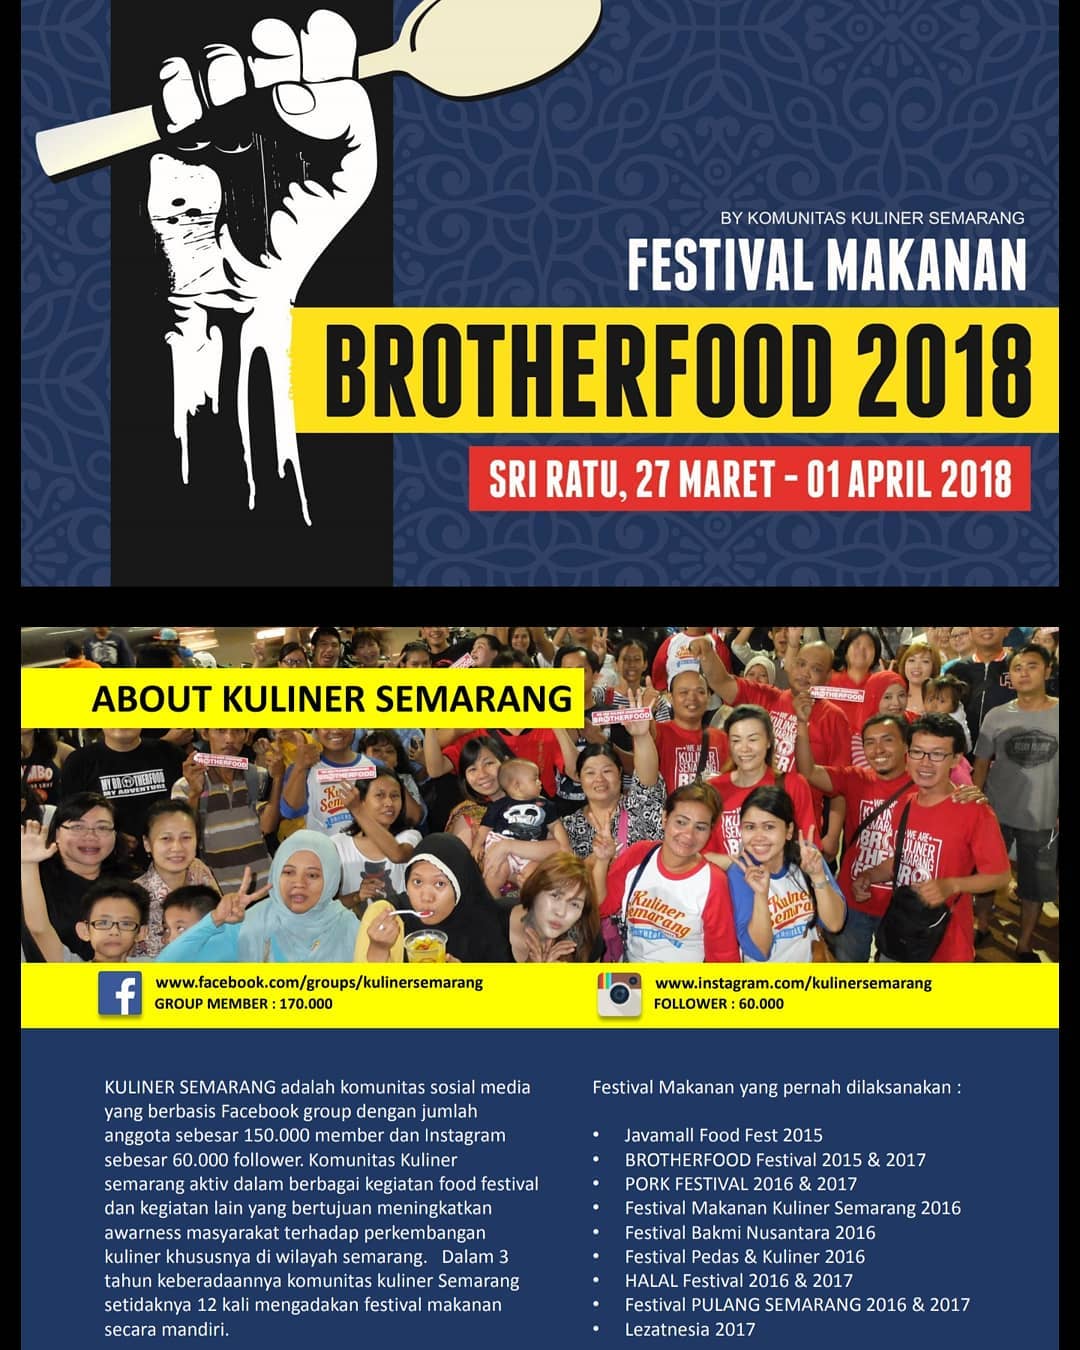 EVENT SEMARANG - BROTHERFOODFEST 2018